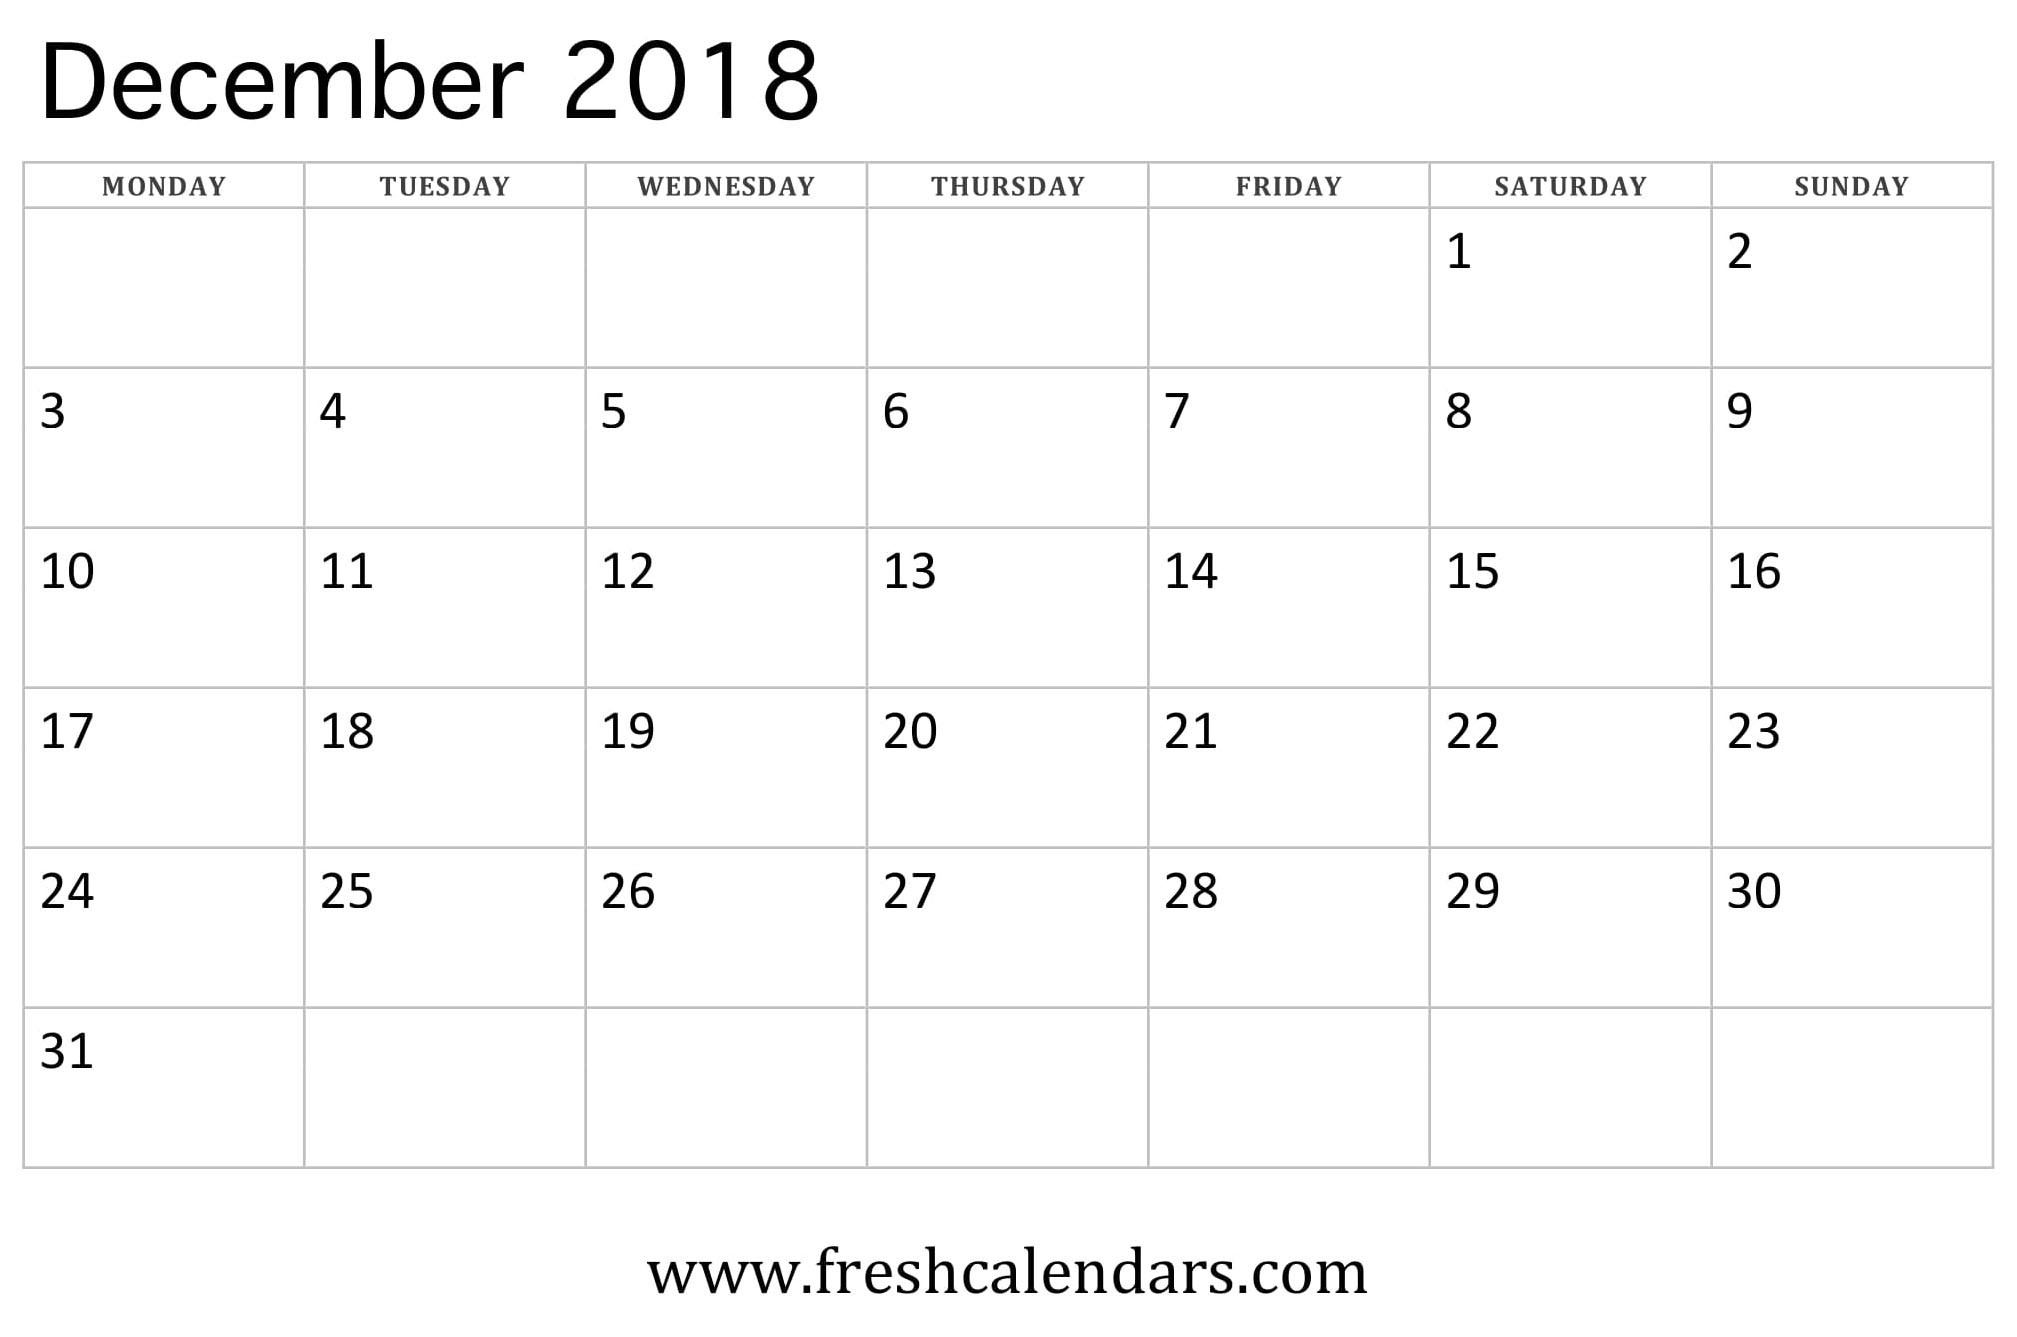 December 2018 Calendar Printable - Fresh Calendars-Monthly Calendar Starts On Monday